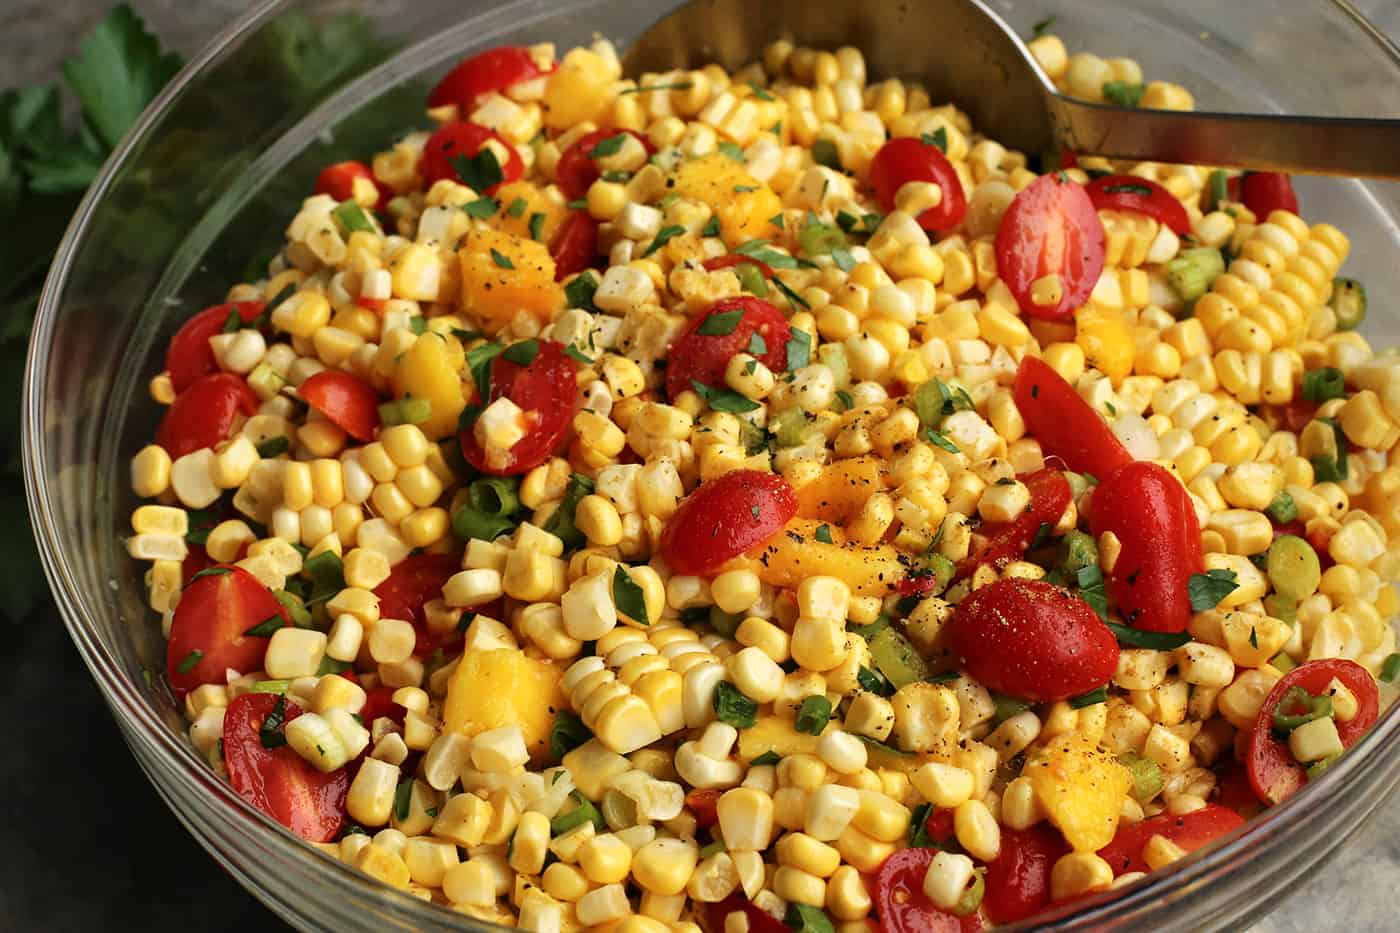 A spoon stirring tomato and sweet corn salad